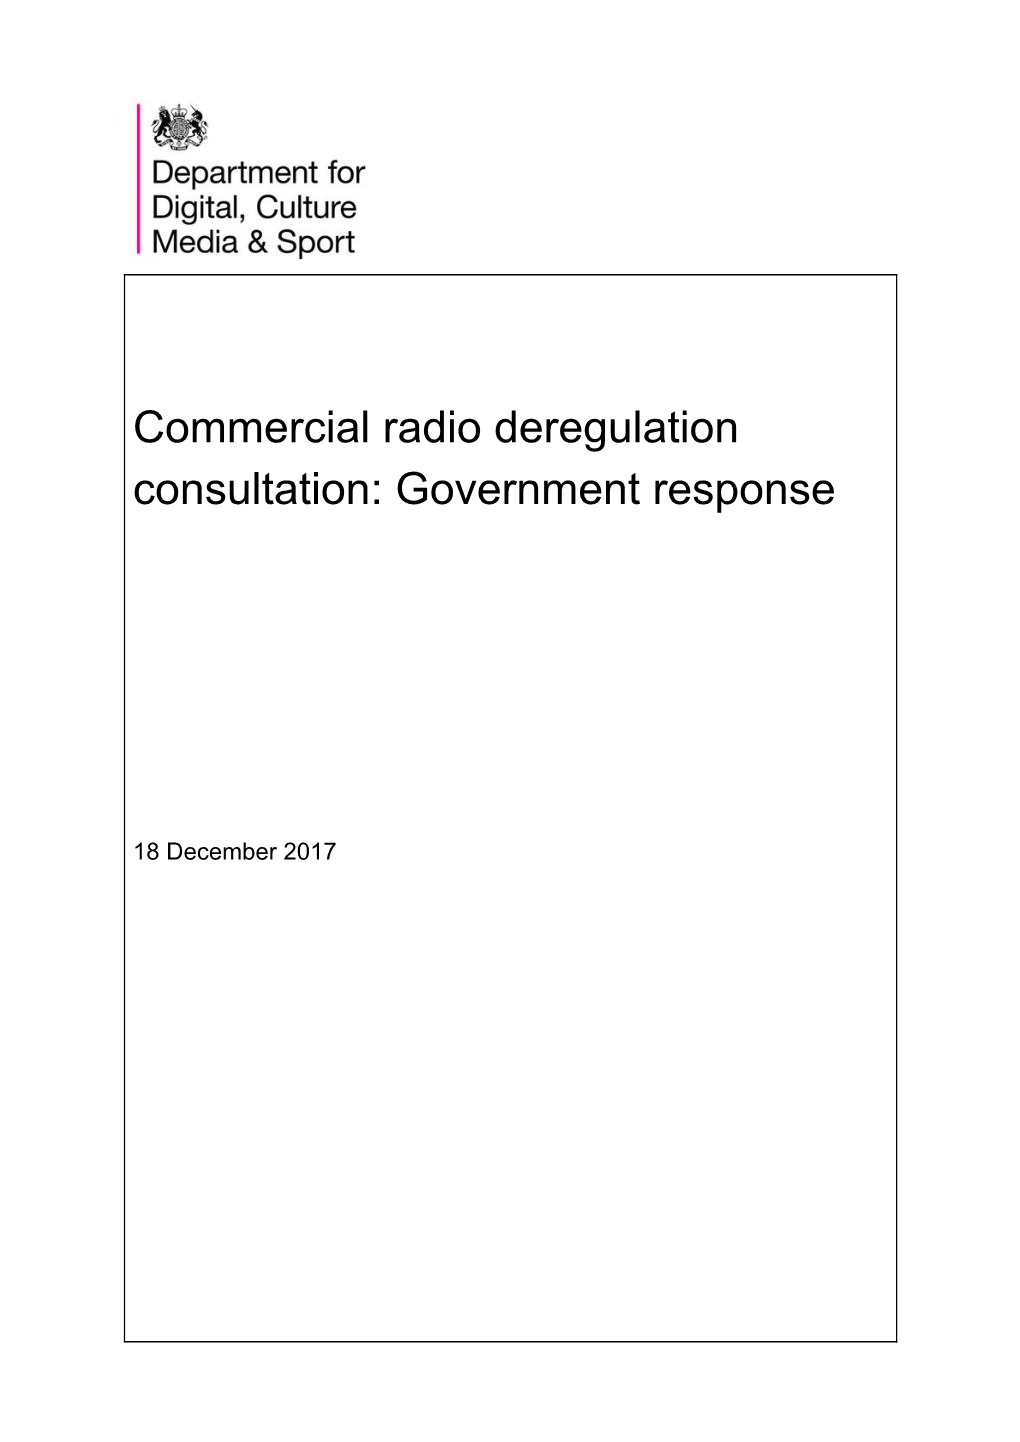 Commercial Radio Deregulation Consultation: Government Response